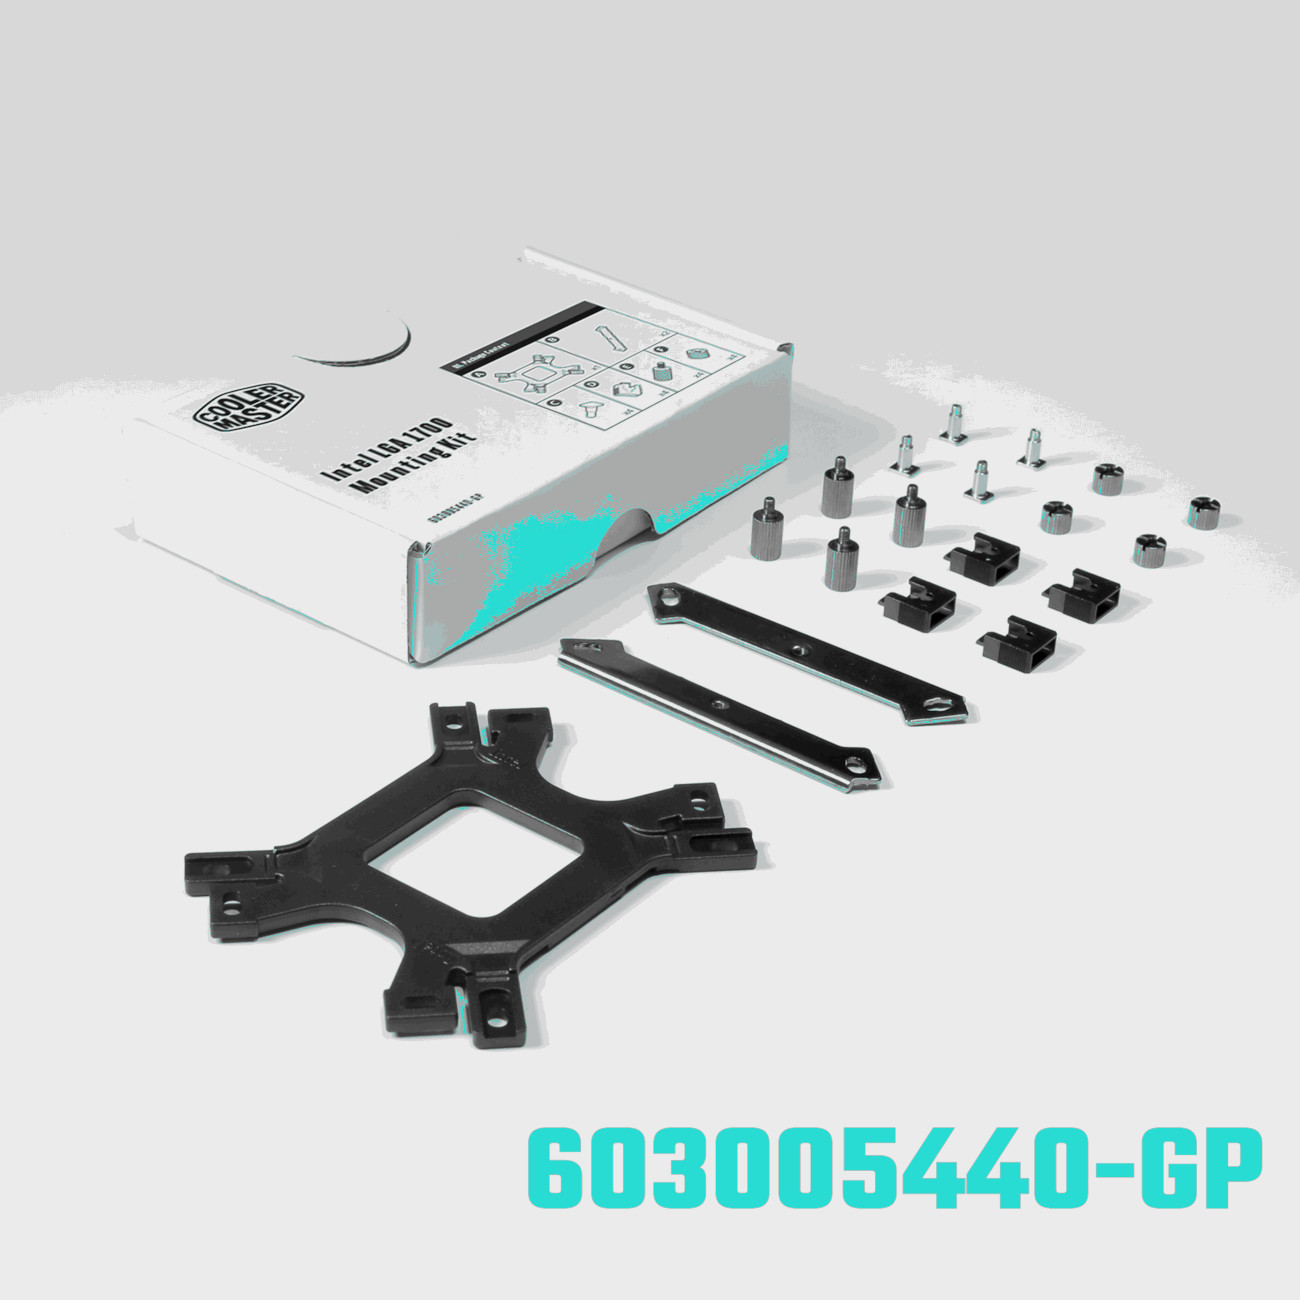 Coolermaster - 603005440-GP -   